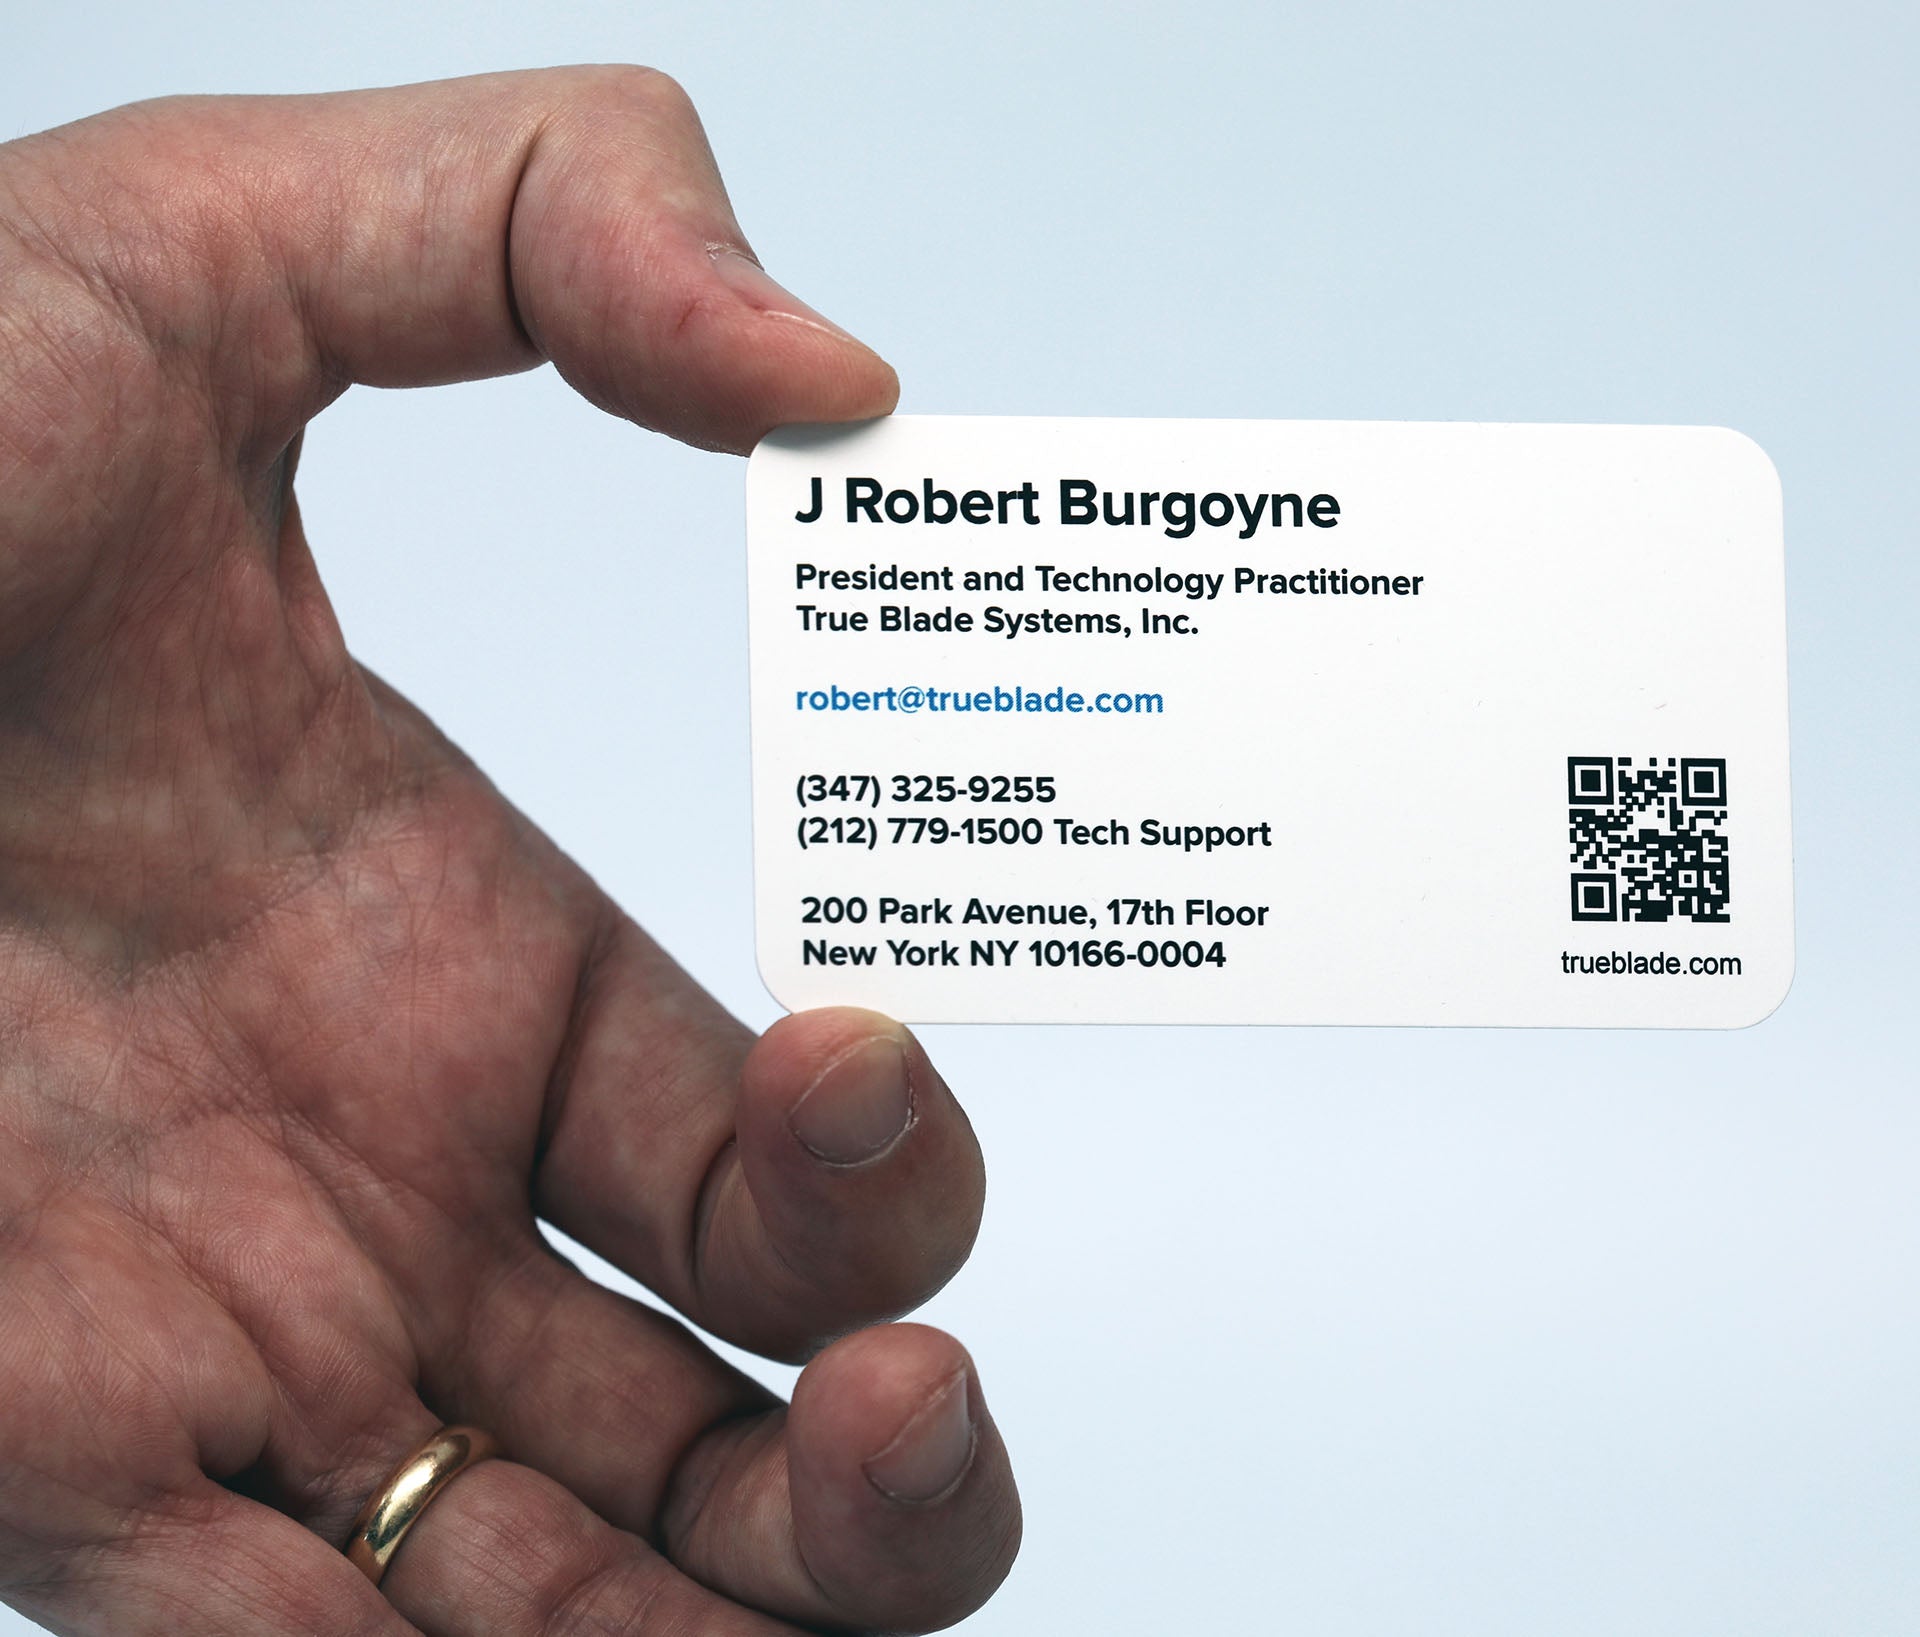 J Robert Burgoyne holding his new business card